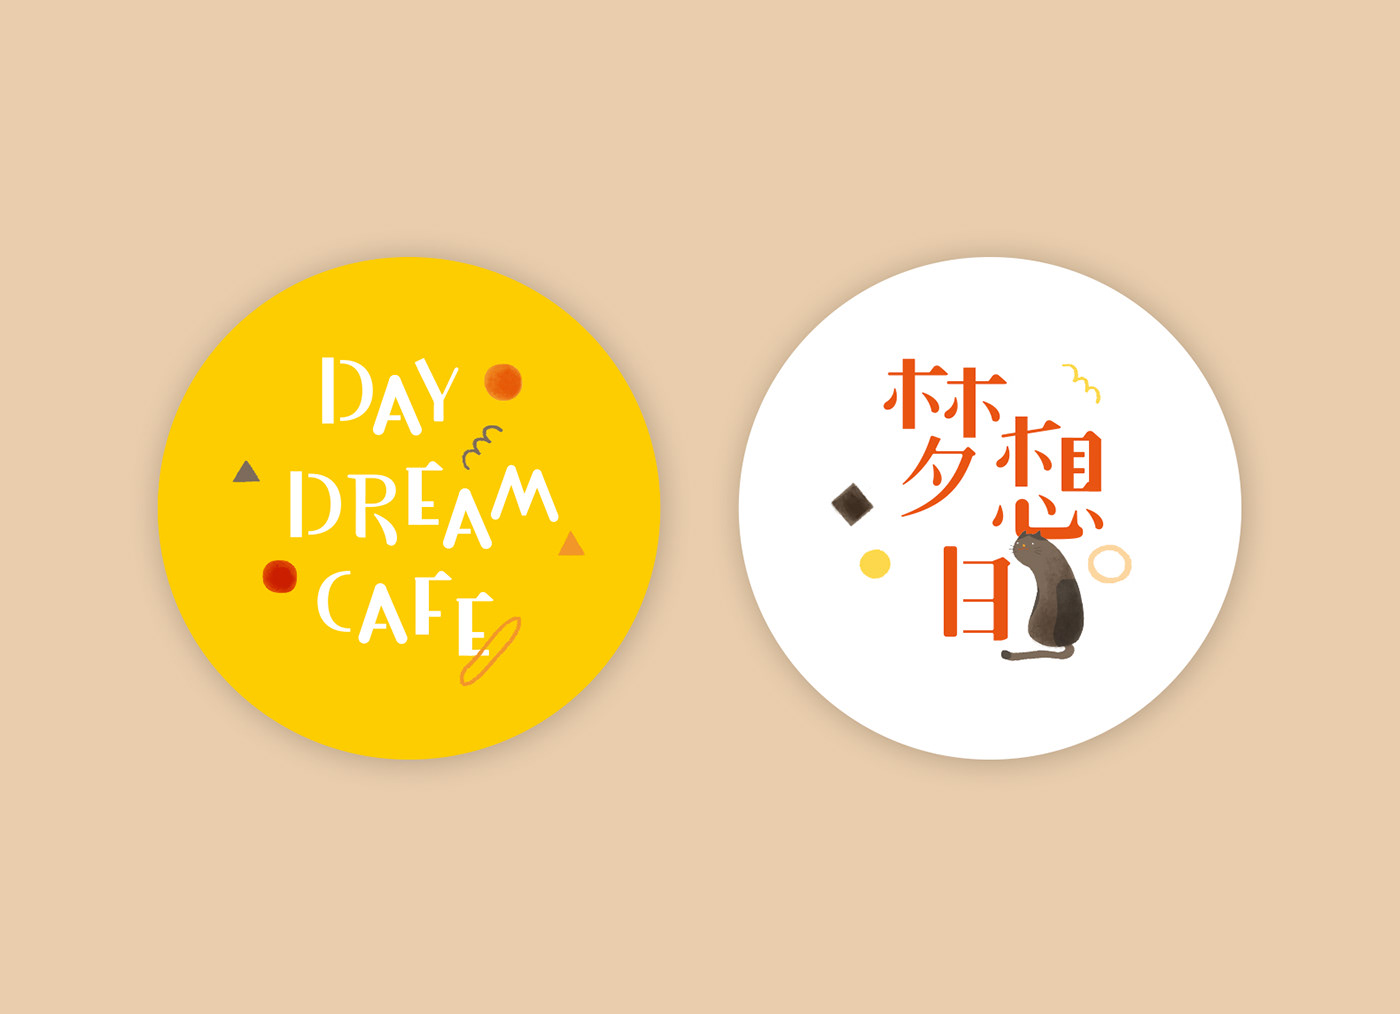 梦想日咖啡品牌设计 Day Dream cafe brand design Coffee brand day dream